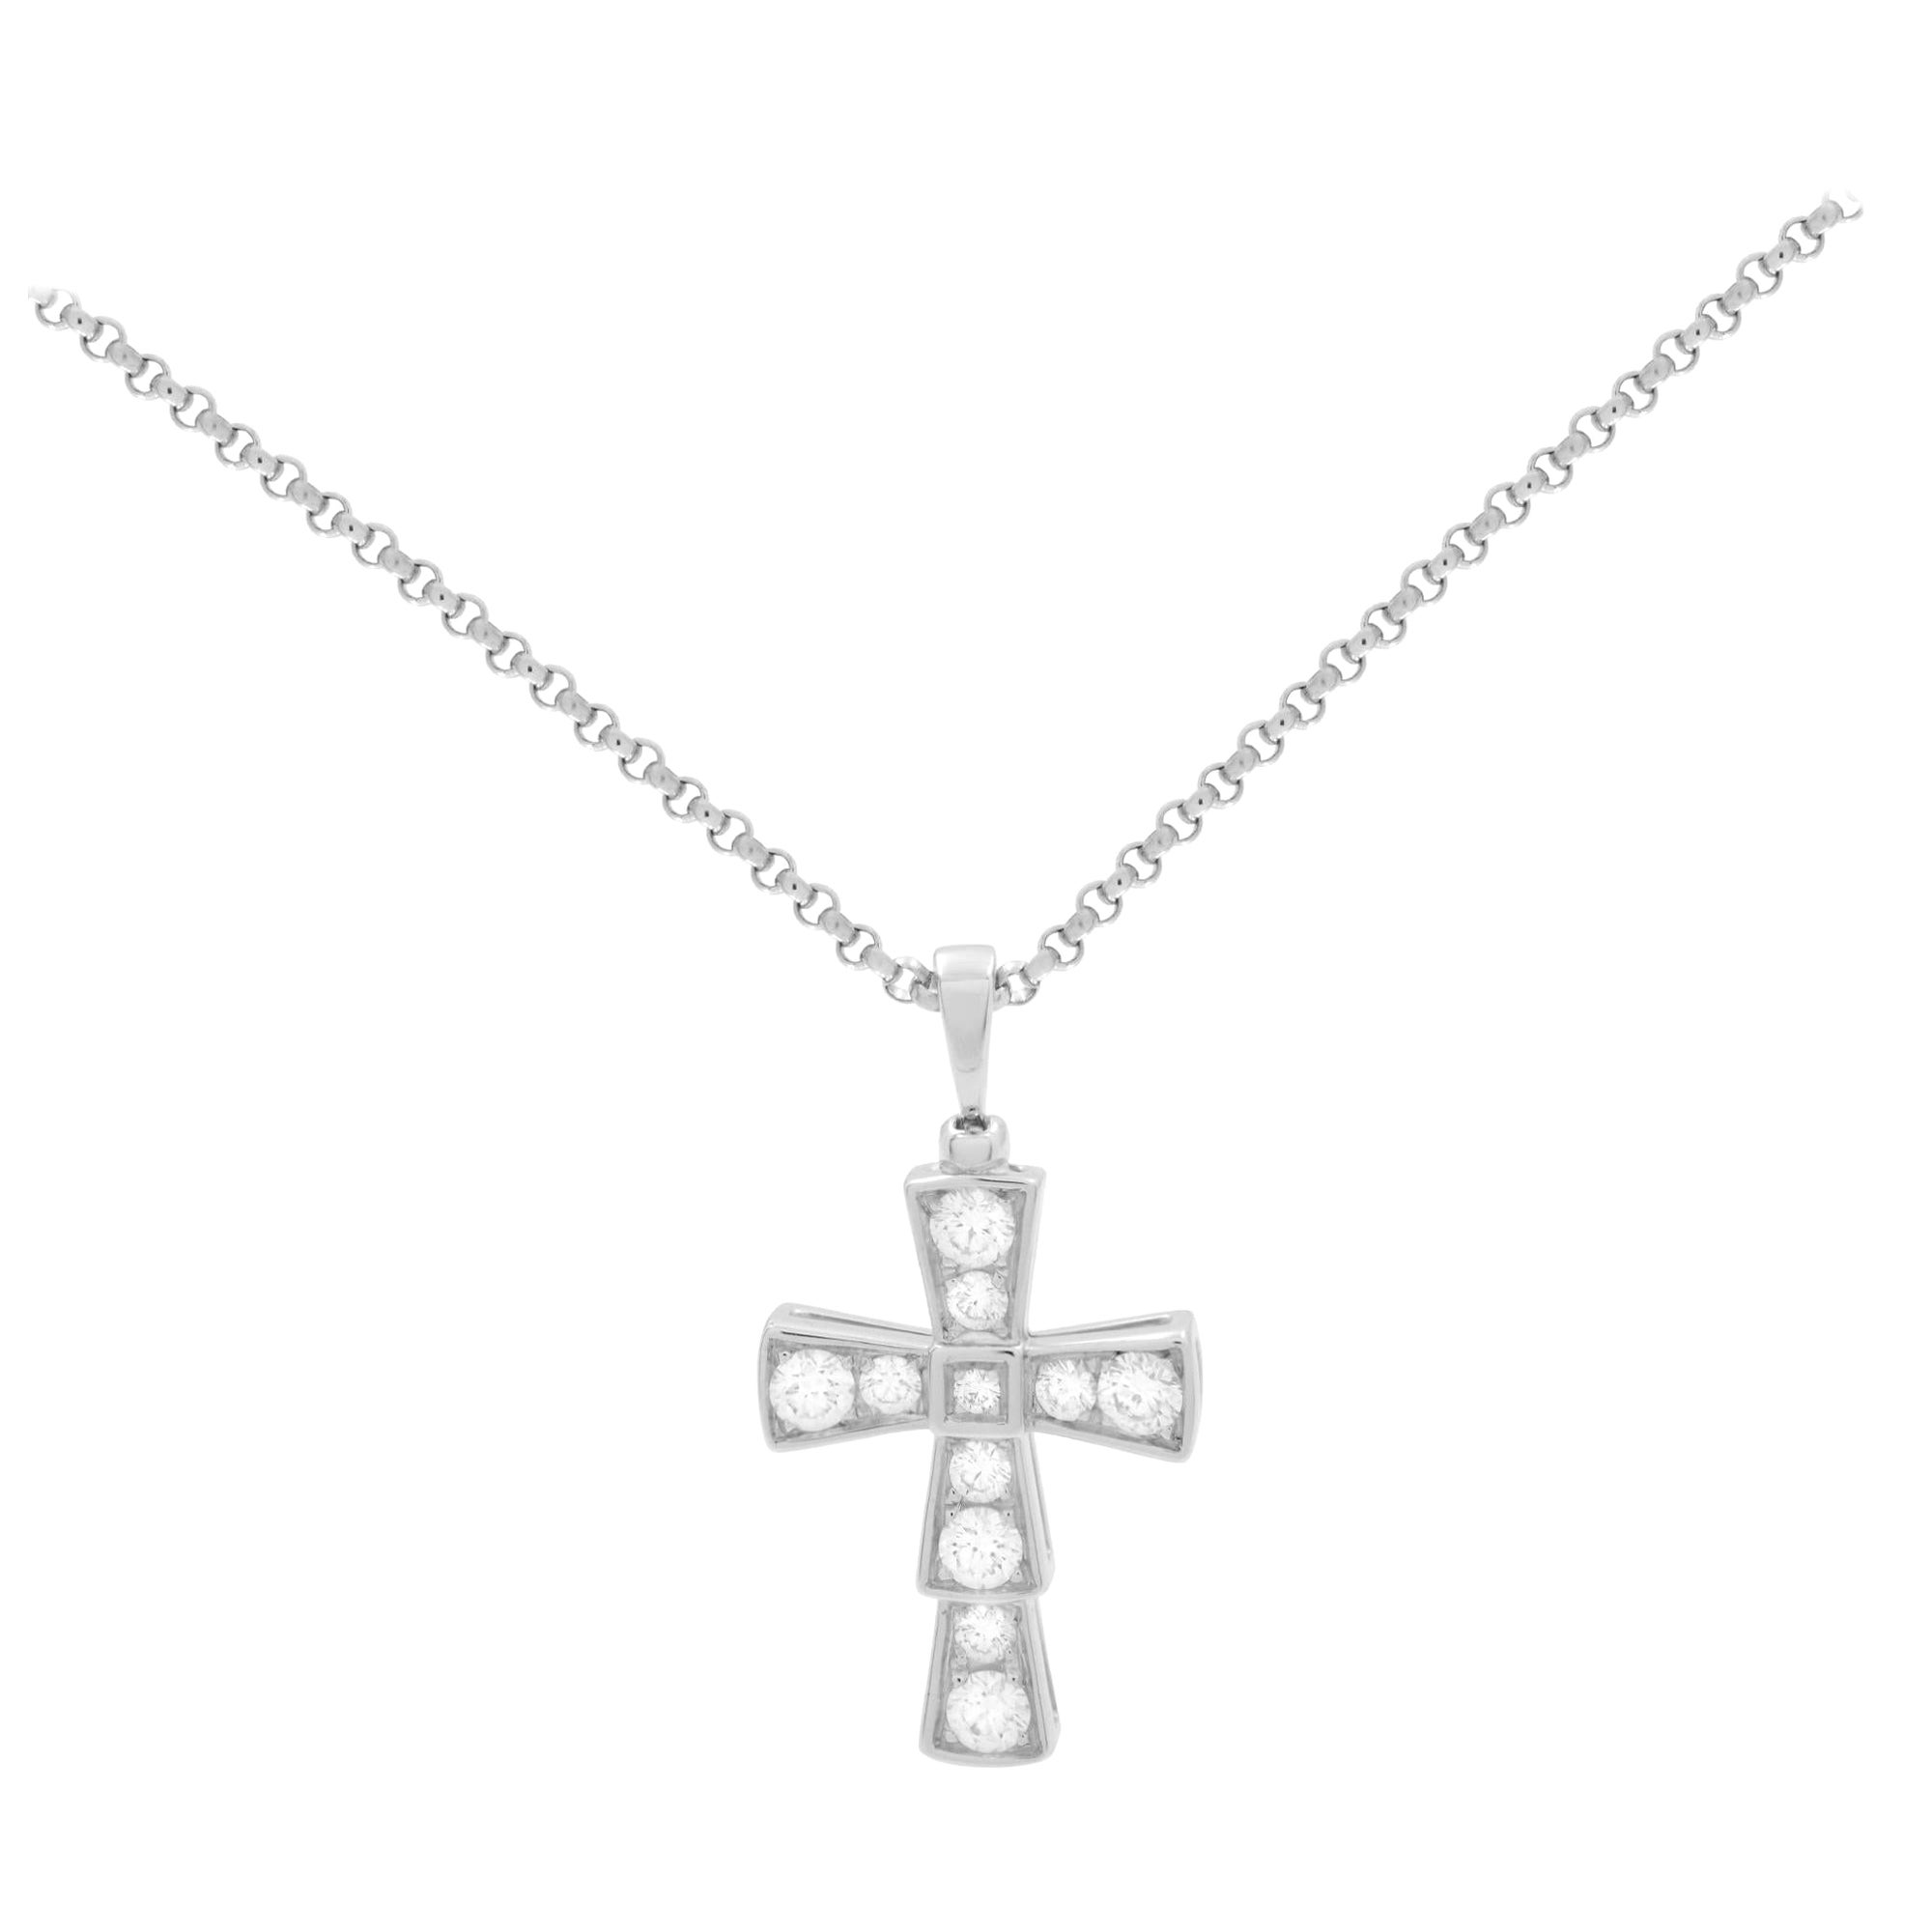 Bvlgari, collier pendentif croix en or blanc 18 carats et diamants 0,32 carat